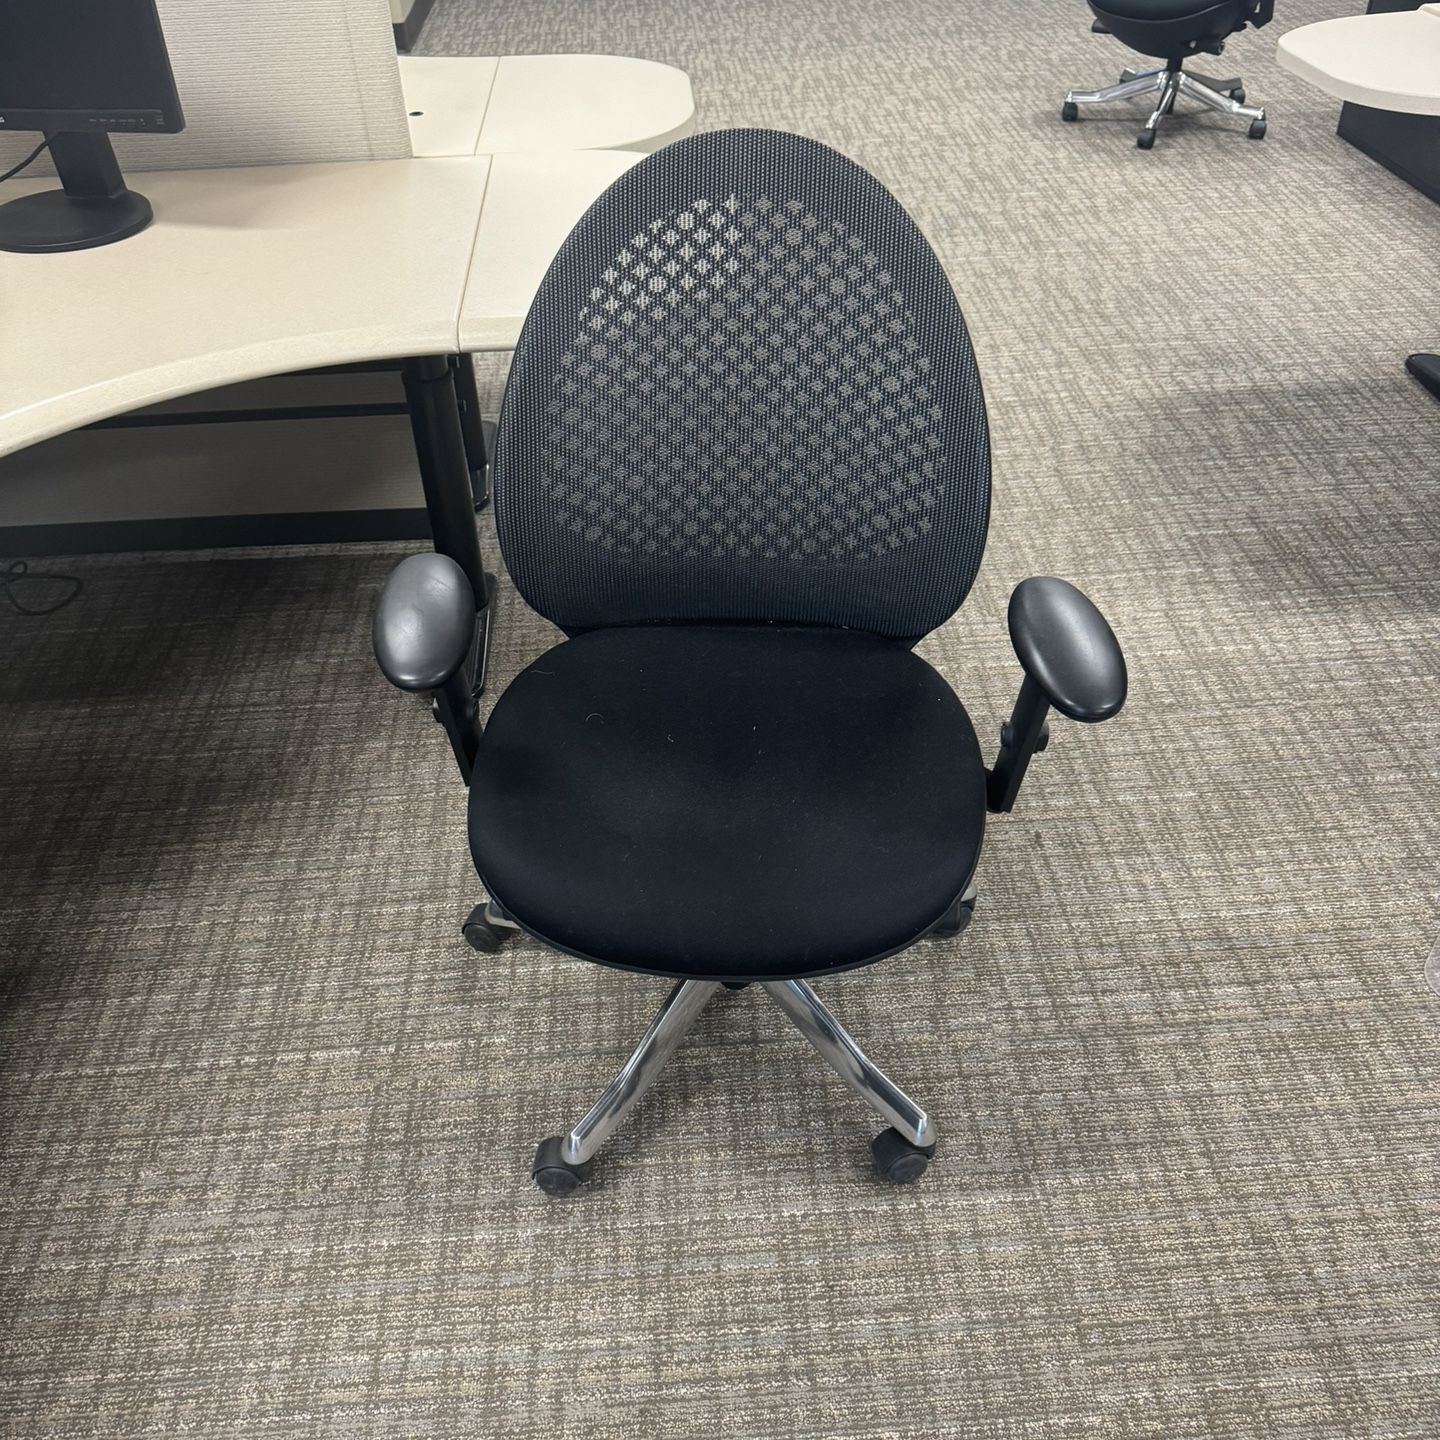 Ergonomic Adjustable Office Desk Chairs 